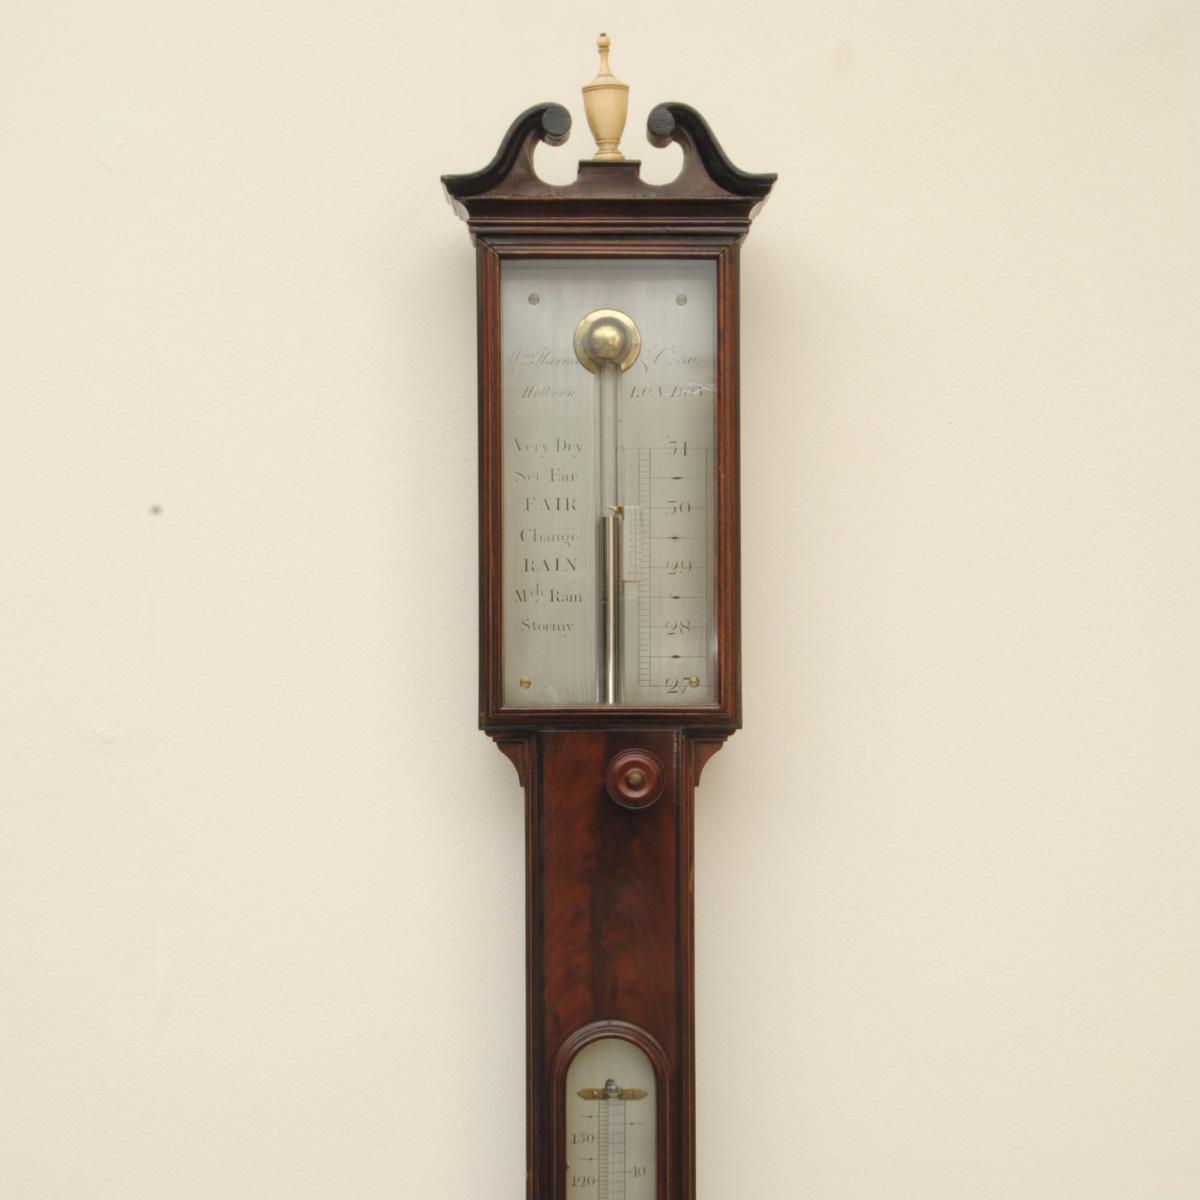 A Fine Regency Period Mahogany Stick Barometer by Harris, London